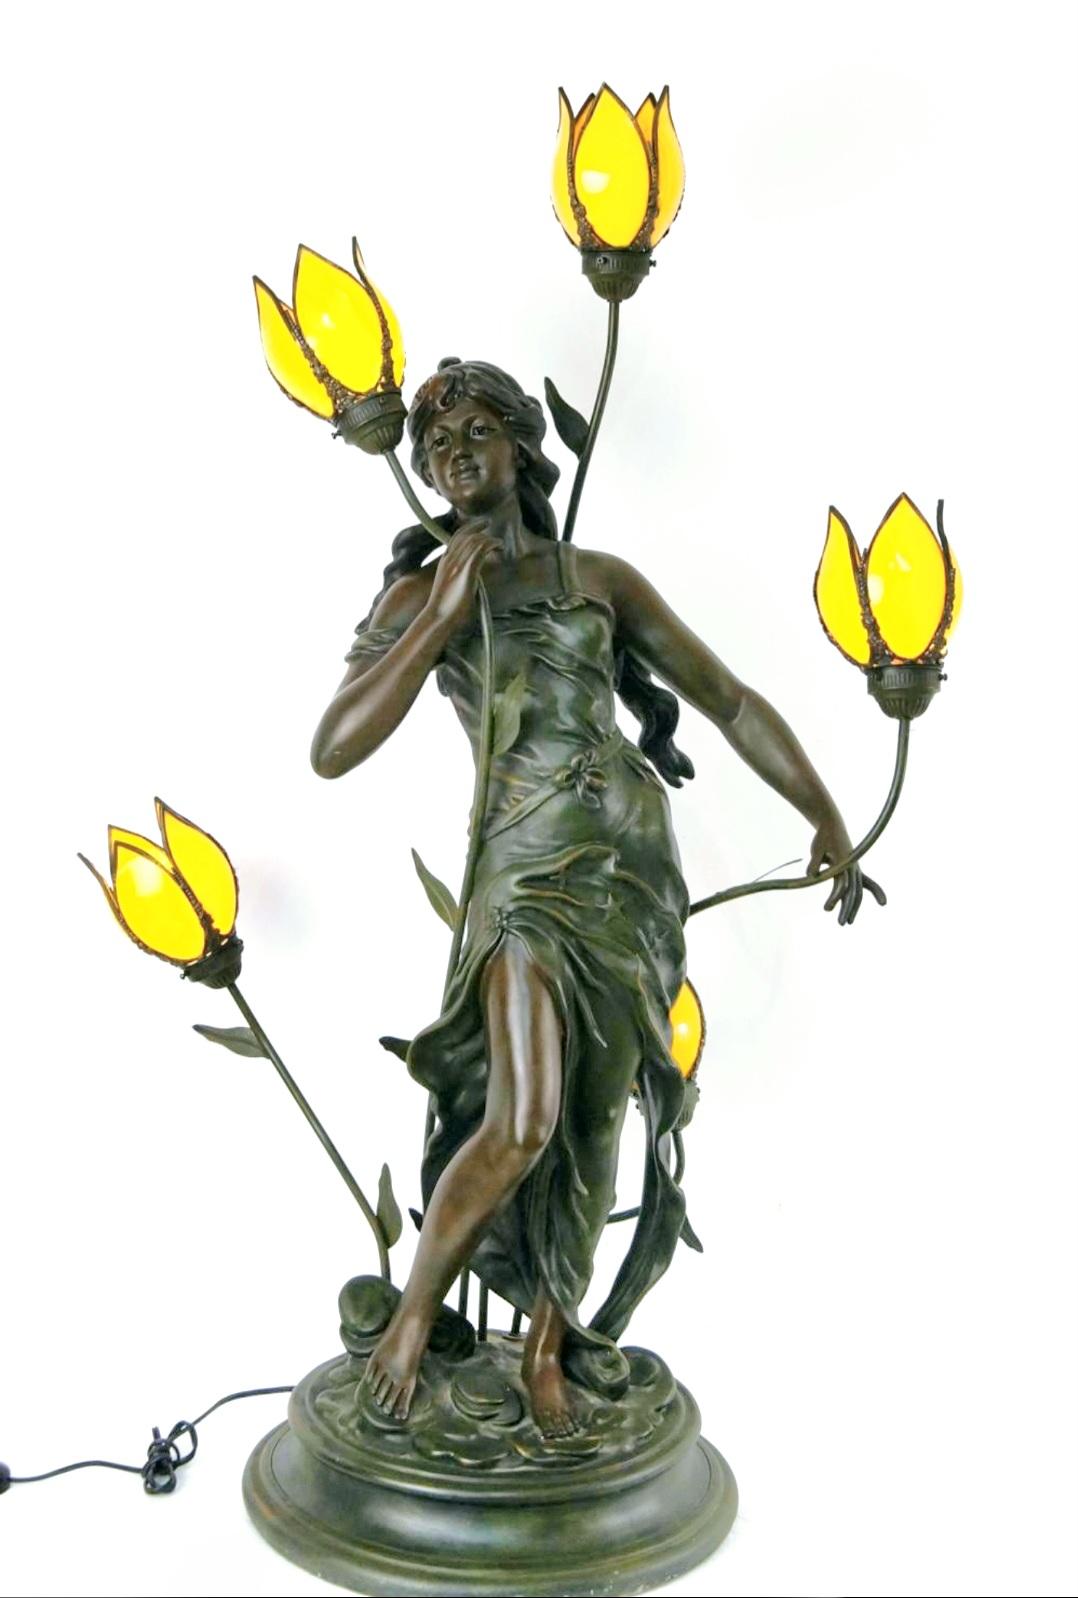 Rare sculptural tulip slag glass floor lamp with stunning female bronze statue.
50